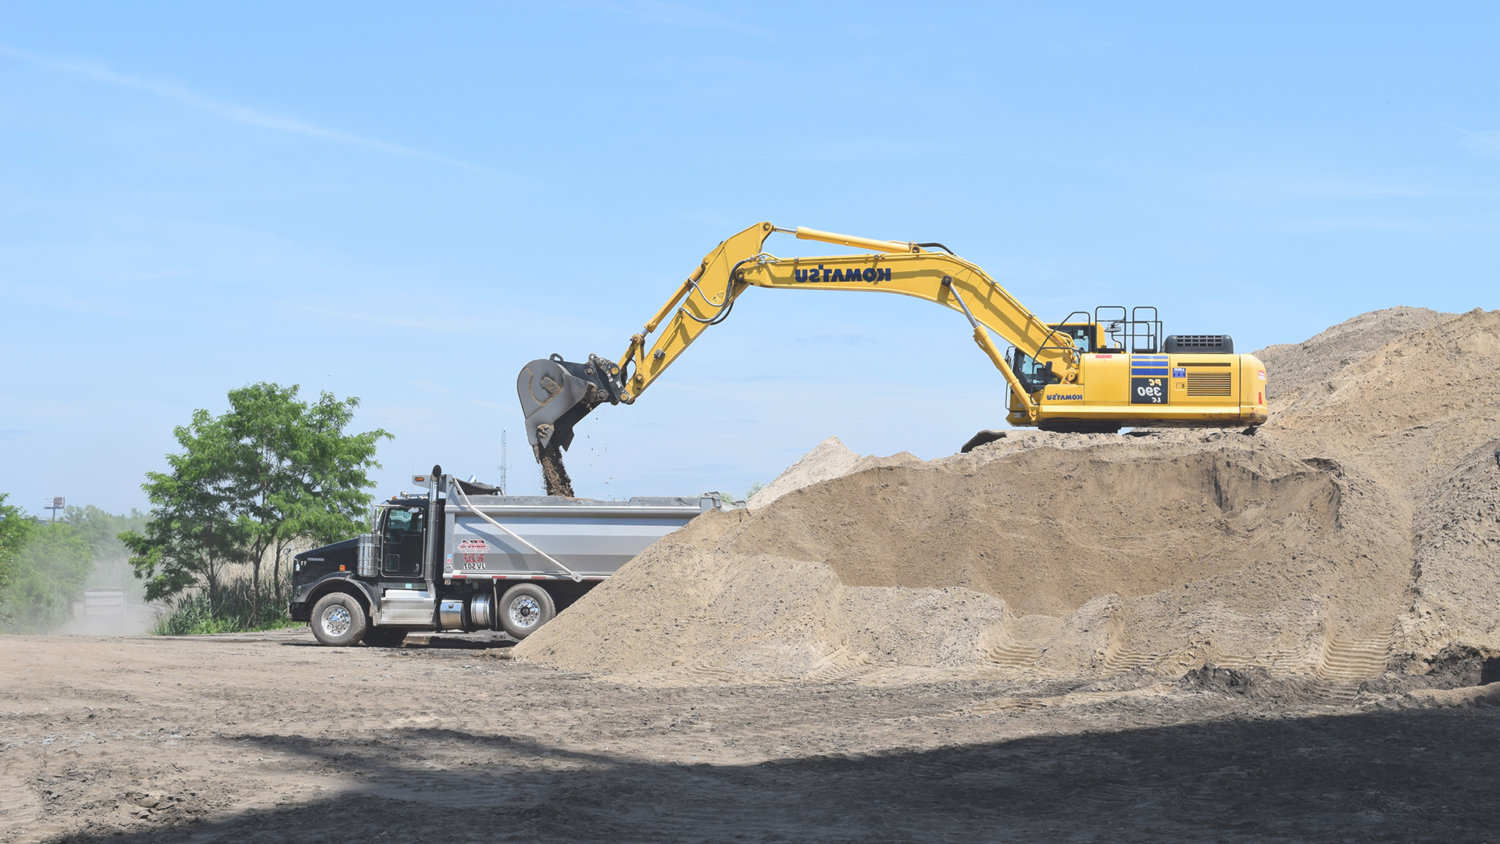 Excavator removing sand